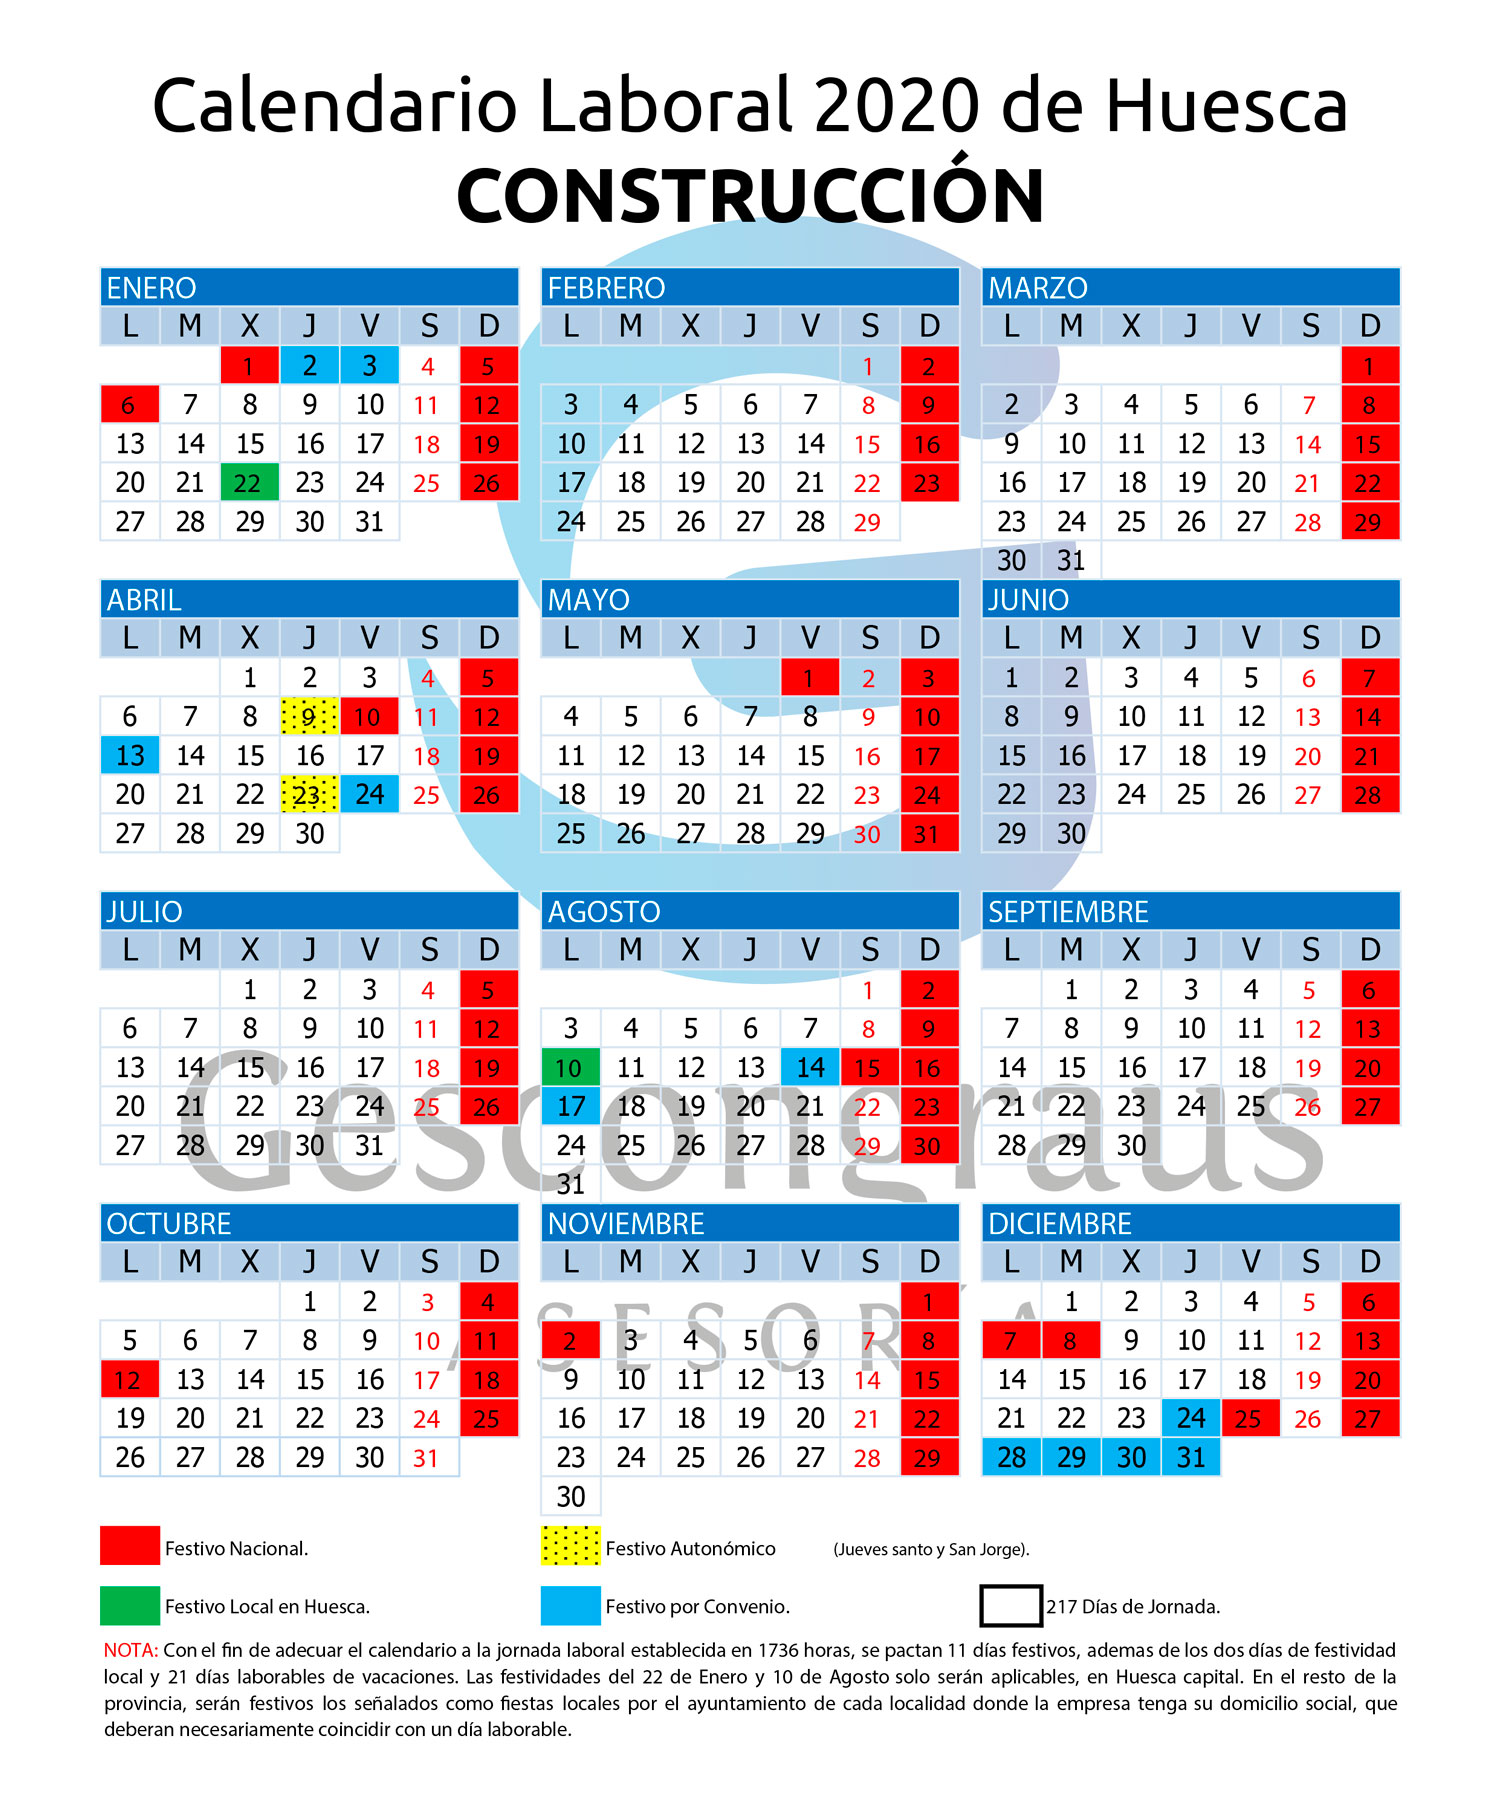 Calendario laboral construccion 2020 de Huesca asesoria Gescongraus de Graus